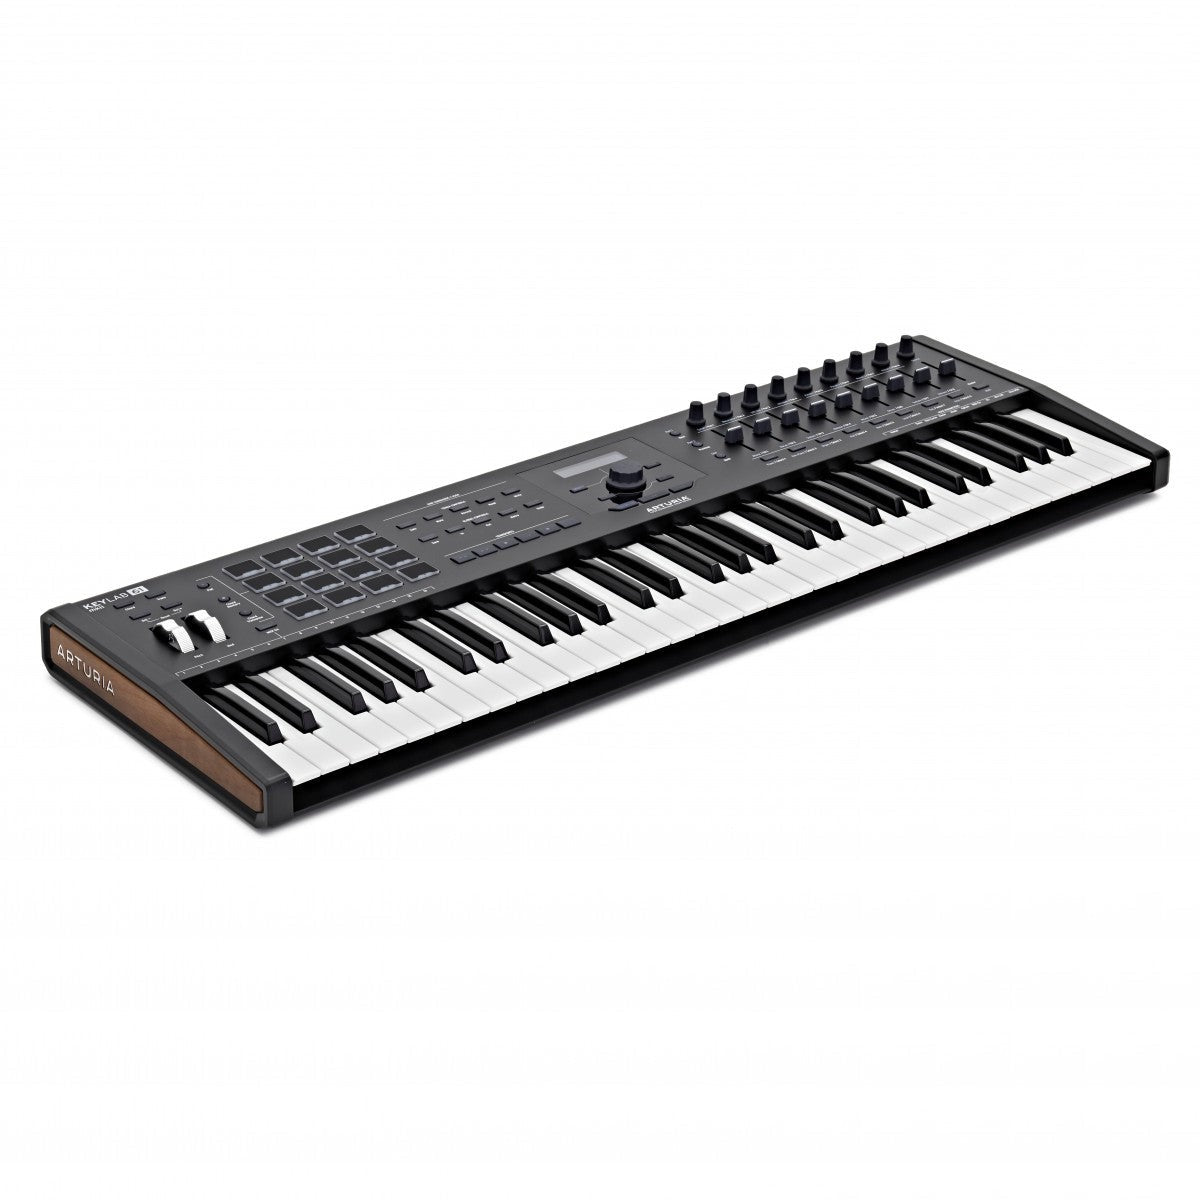 MIDI Keyboard Controller Arturia KeyLab 61 MKII